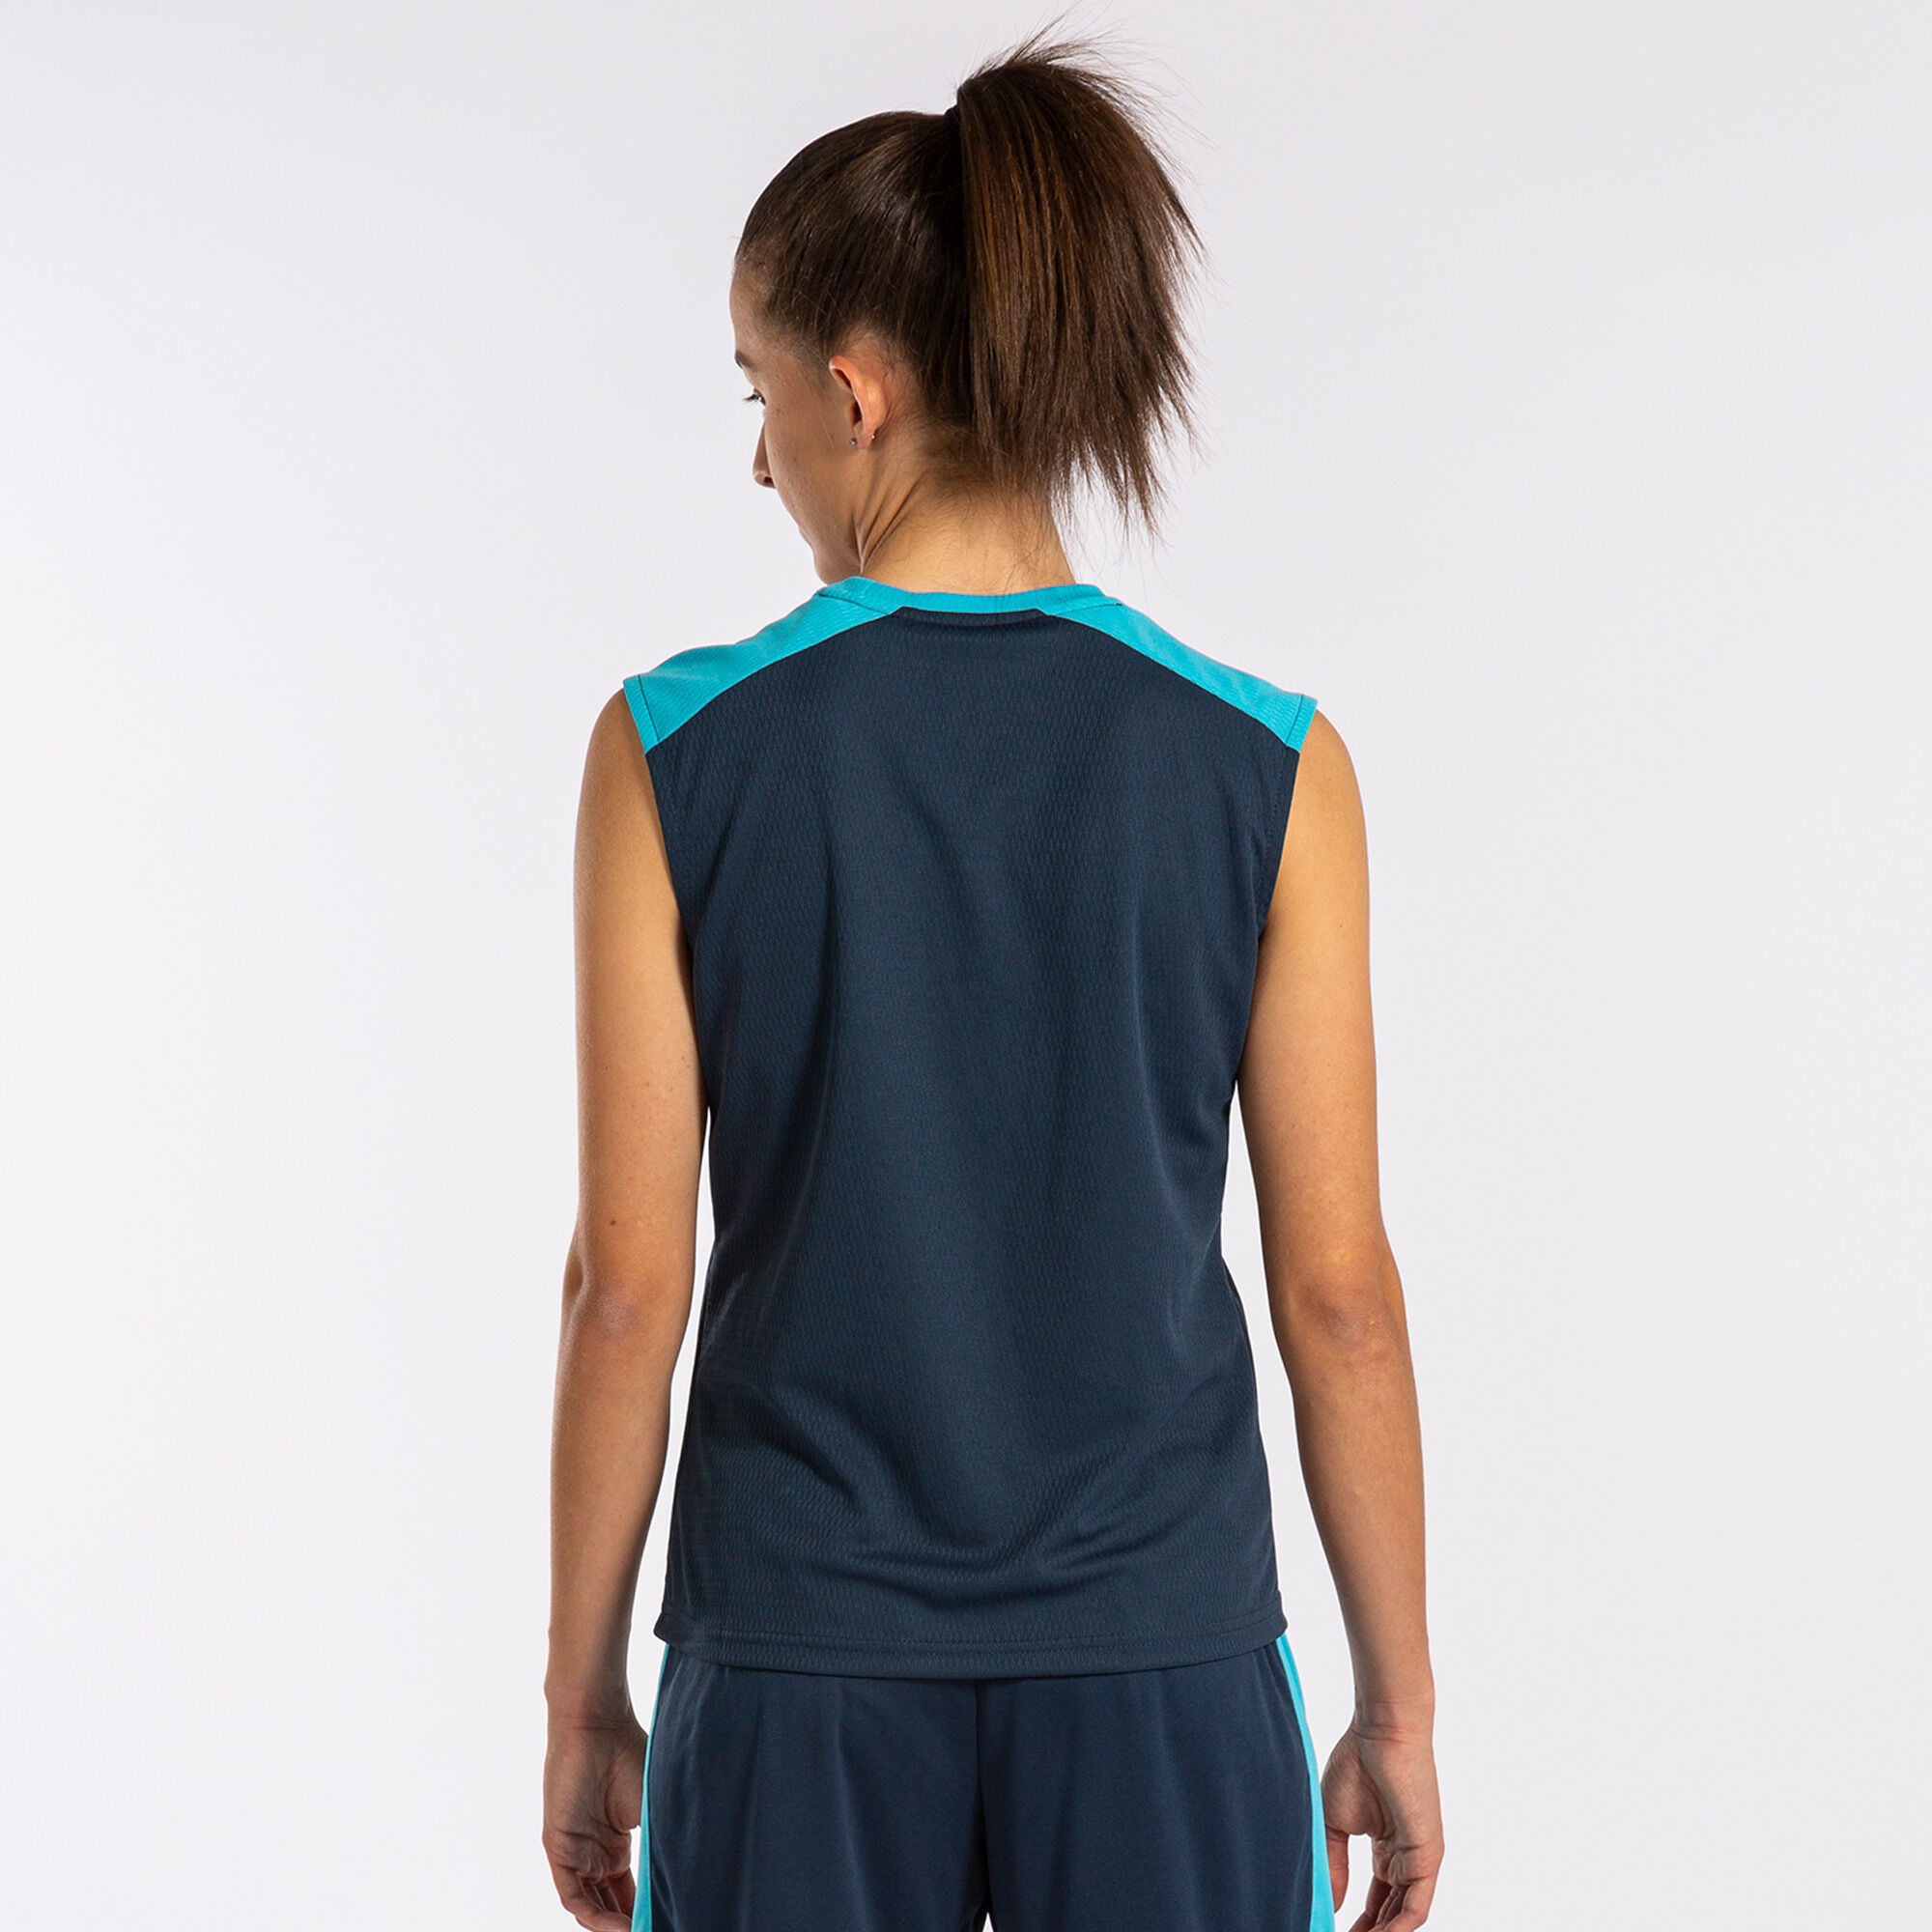 Camiseta tirantes mujer Eco Championship marino turquesa flúor